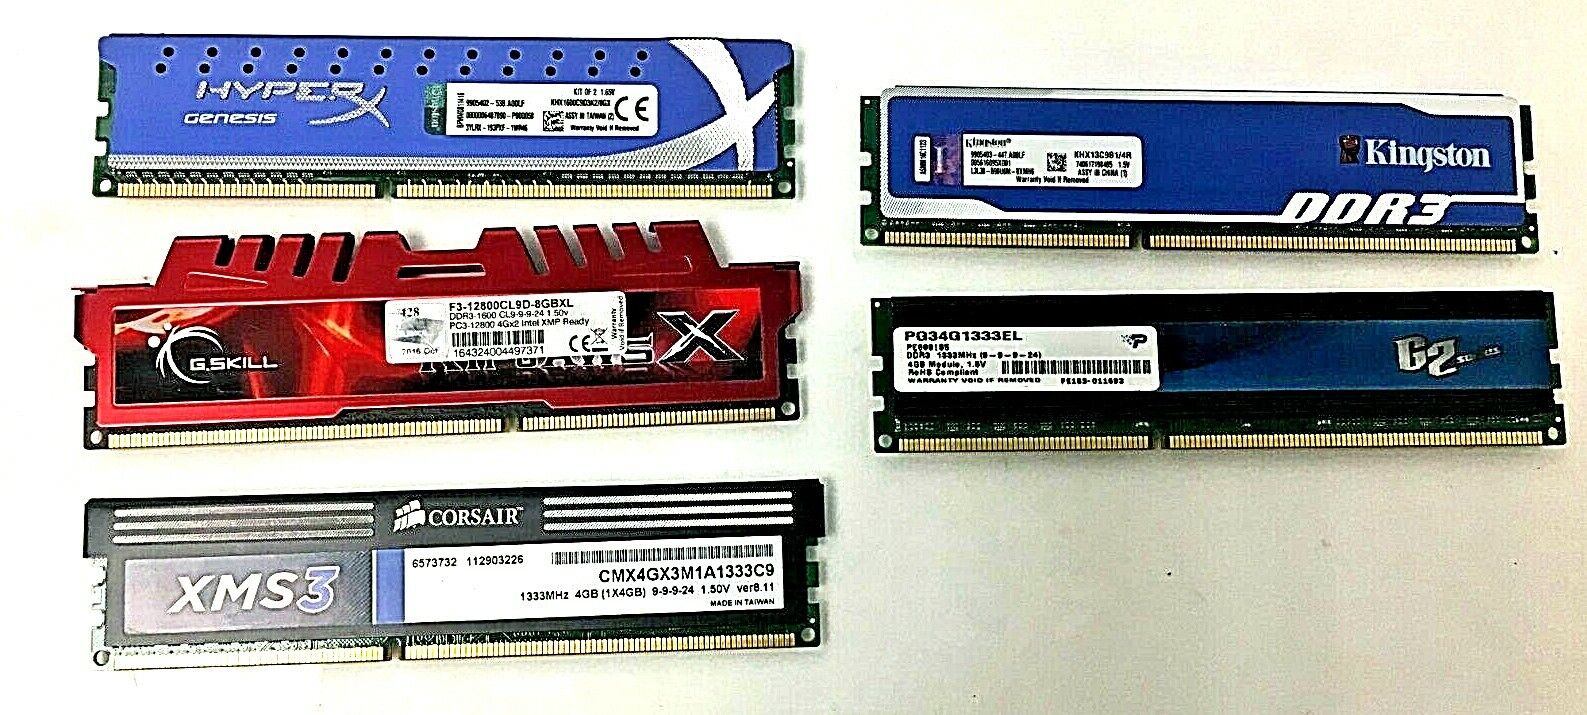 Lot of 5 DDR3 RAM DIMMs Modules GSkill Kingston Patriot Corsair